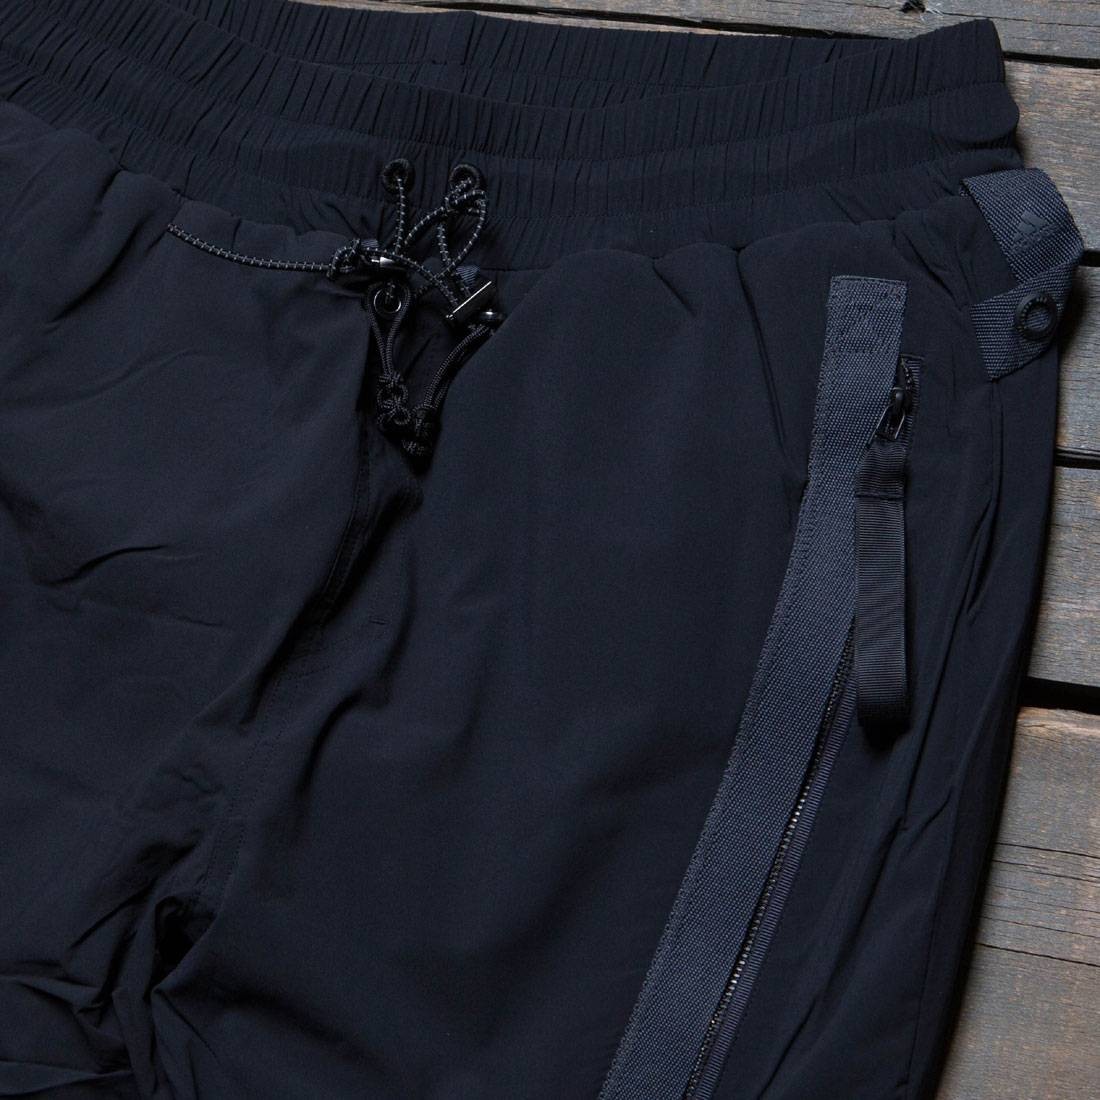 Adidas Consortium Day One Men Softshell Track Pants black